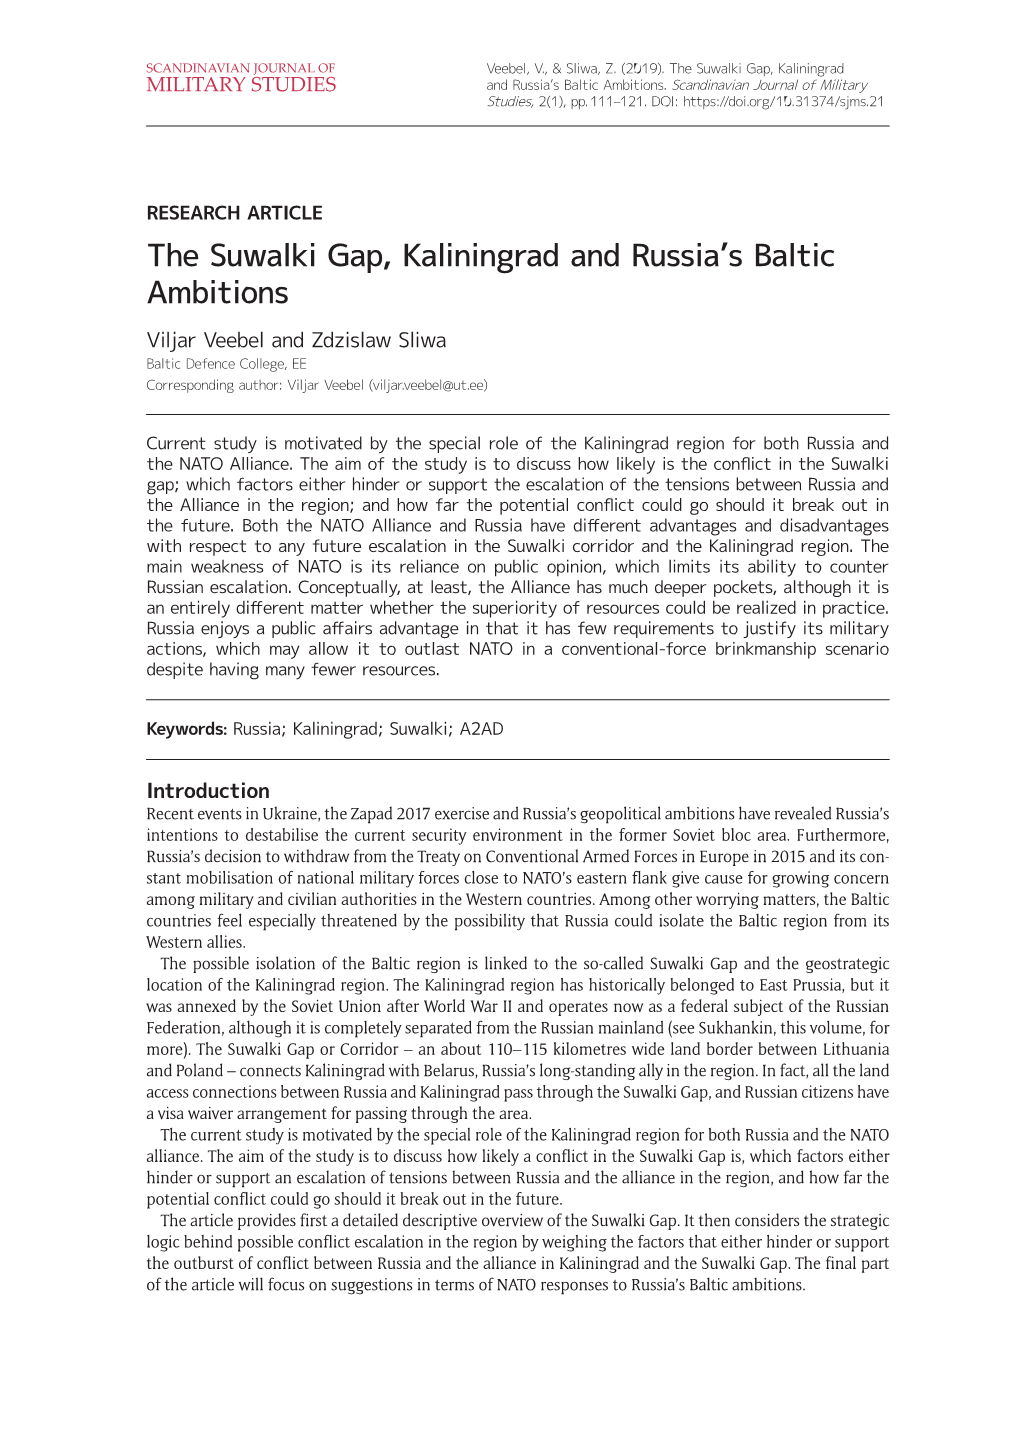 The Suwalki Gap, Kaliningrad and Russia's Baltic Ambitions